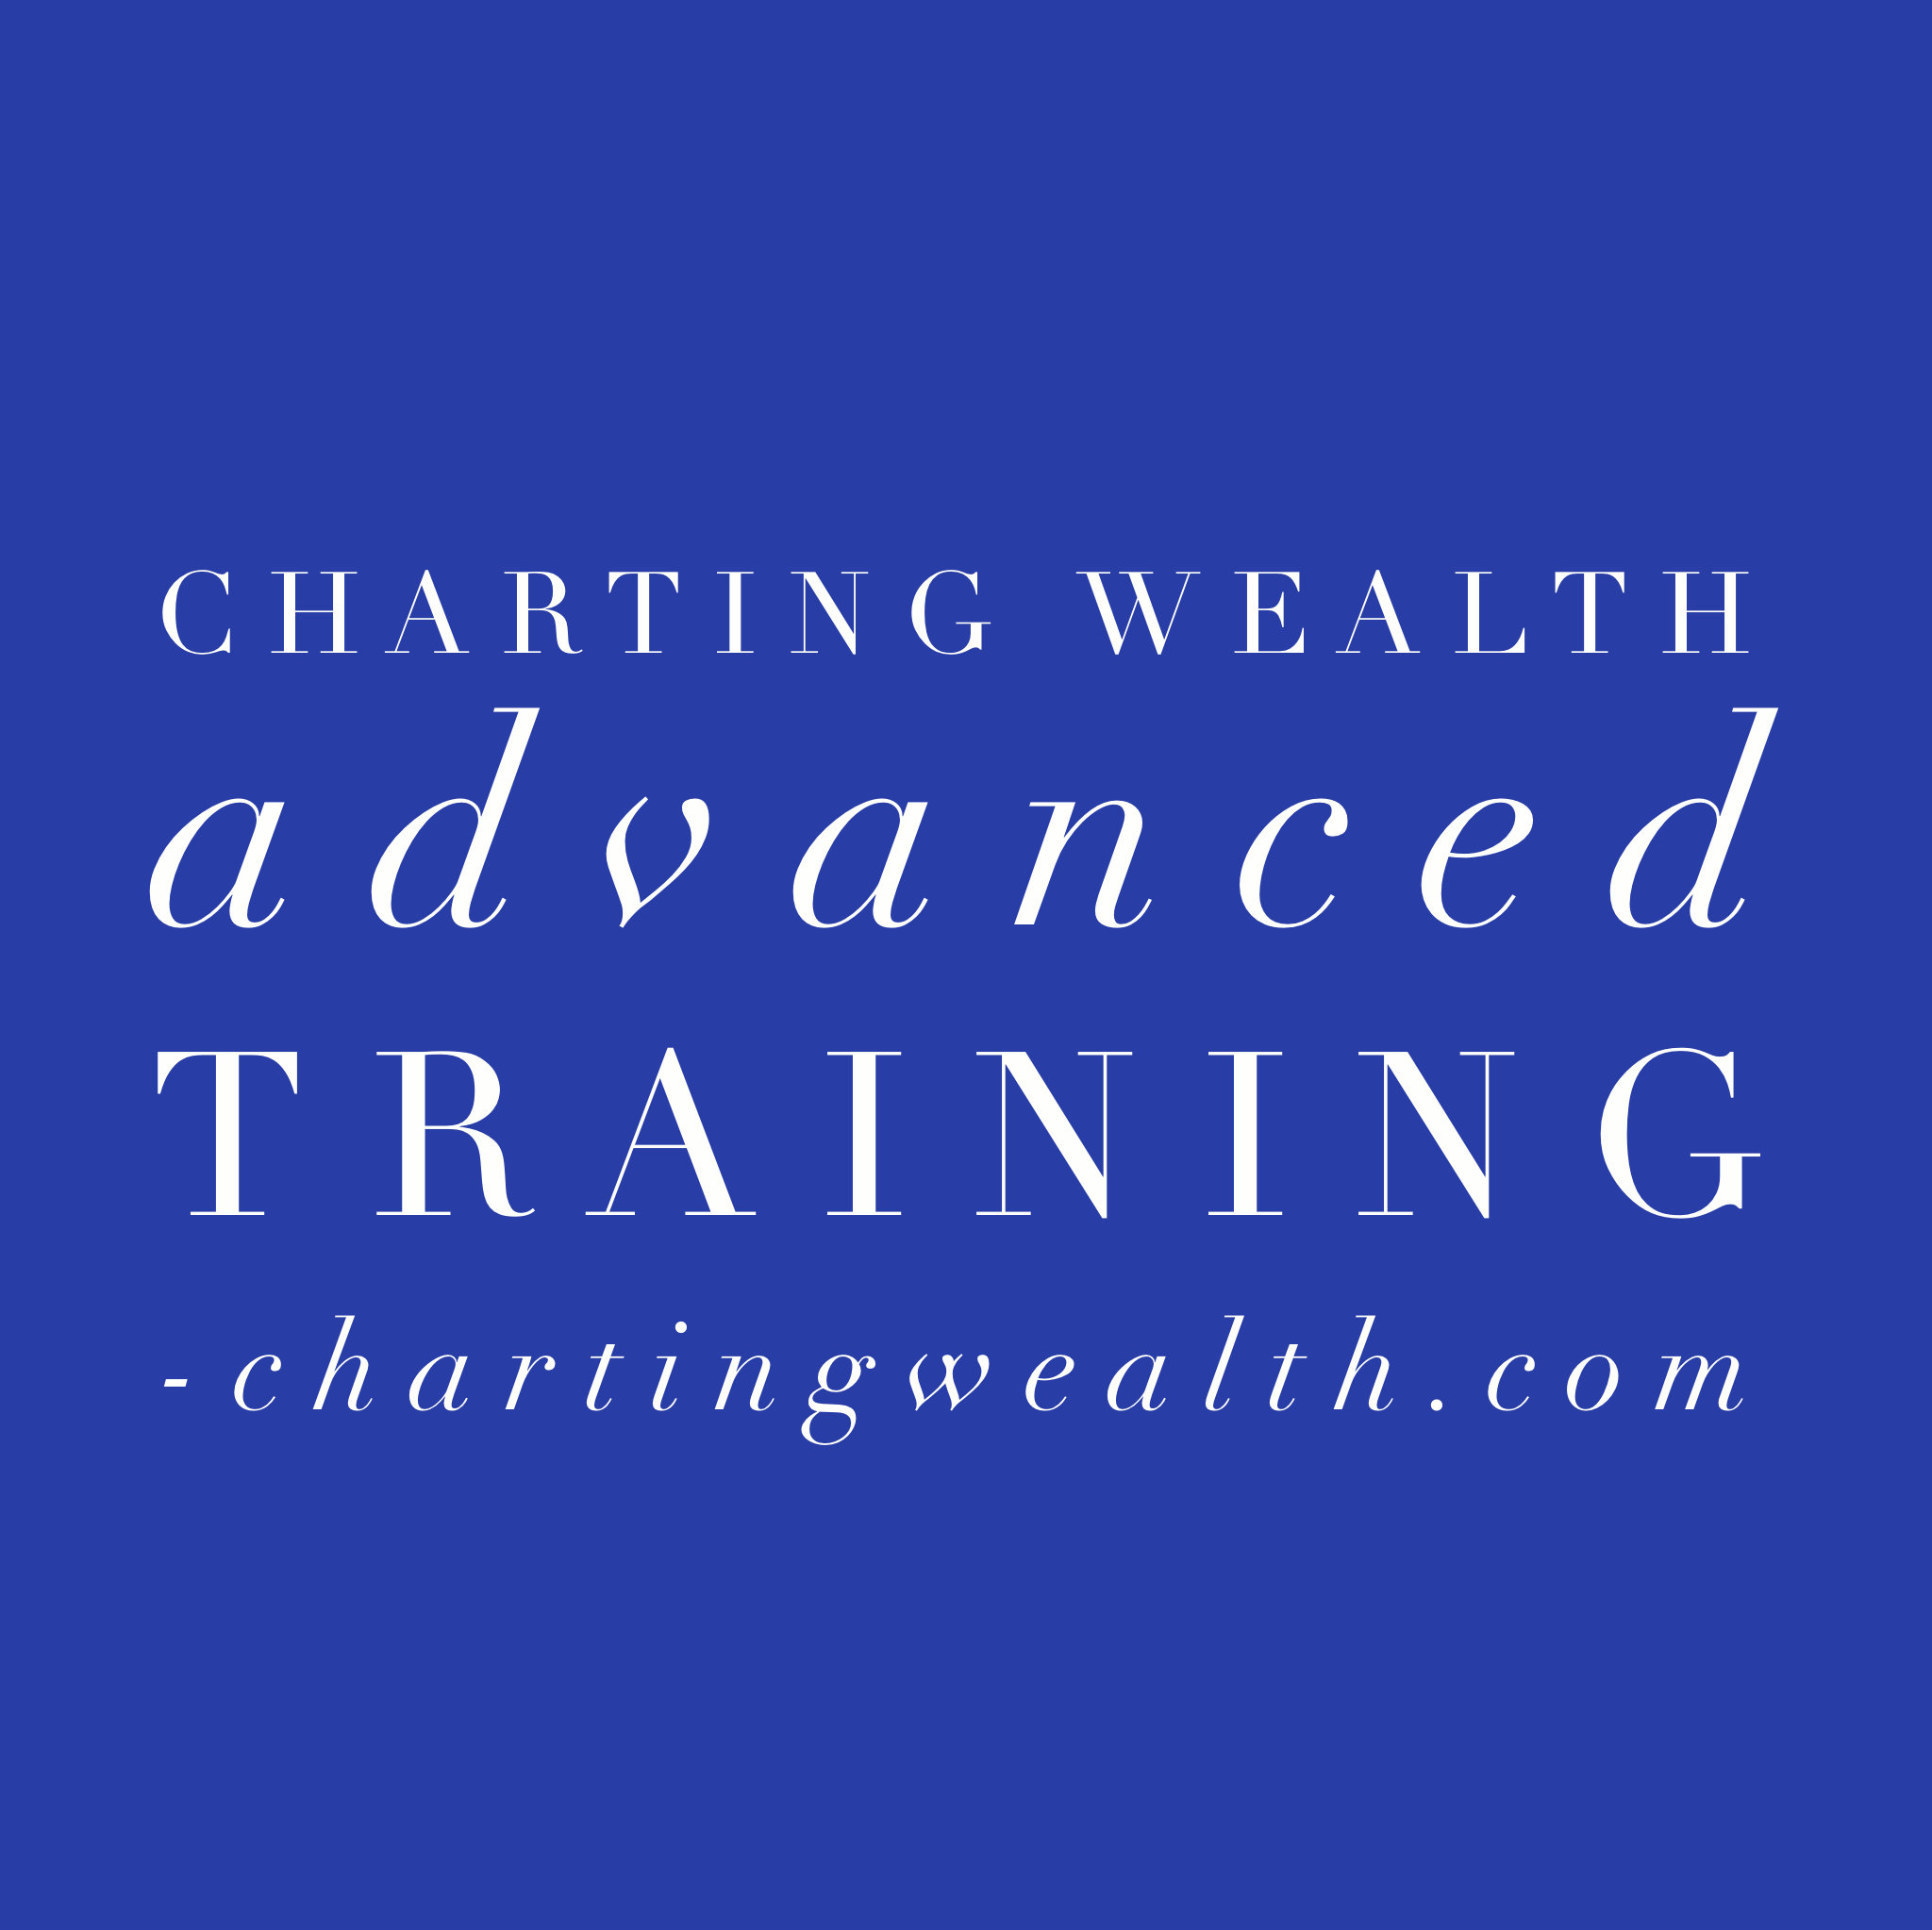 Charting Wealth Com